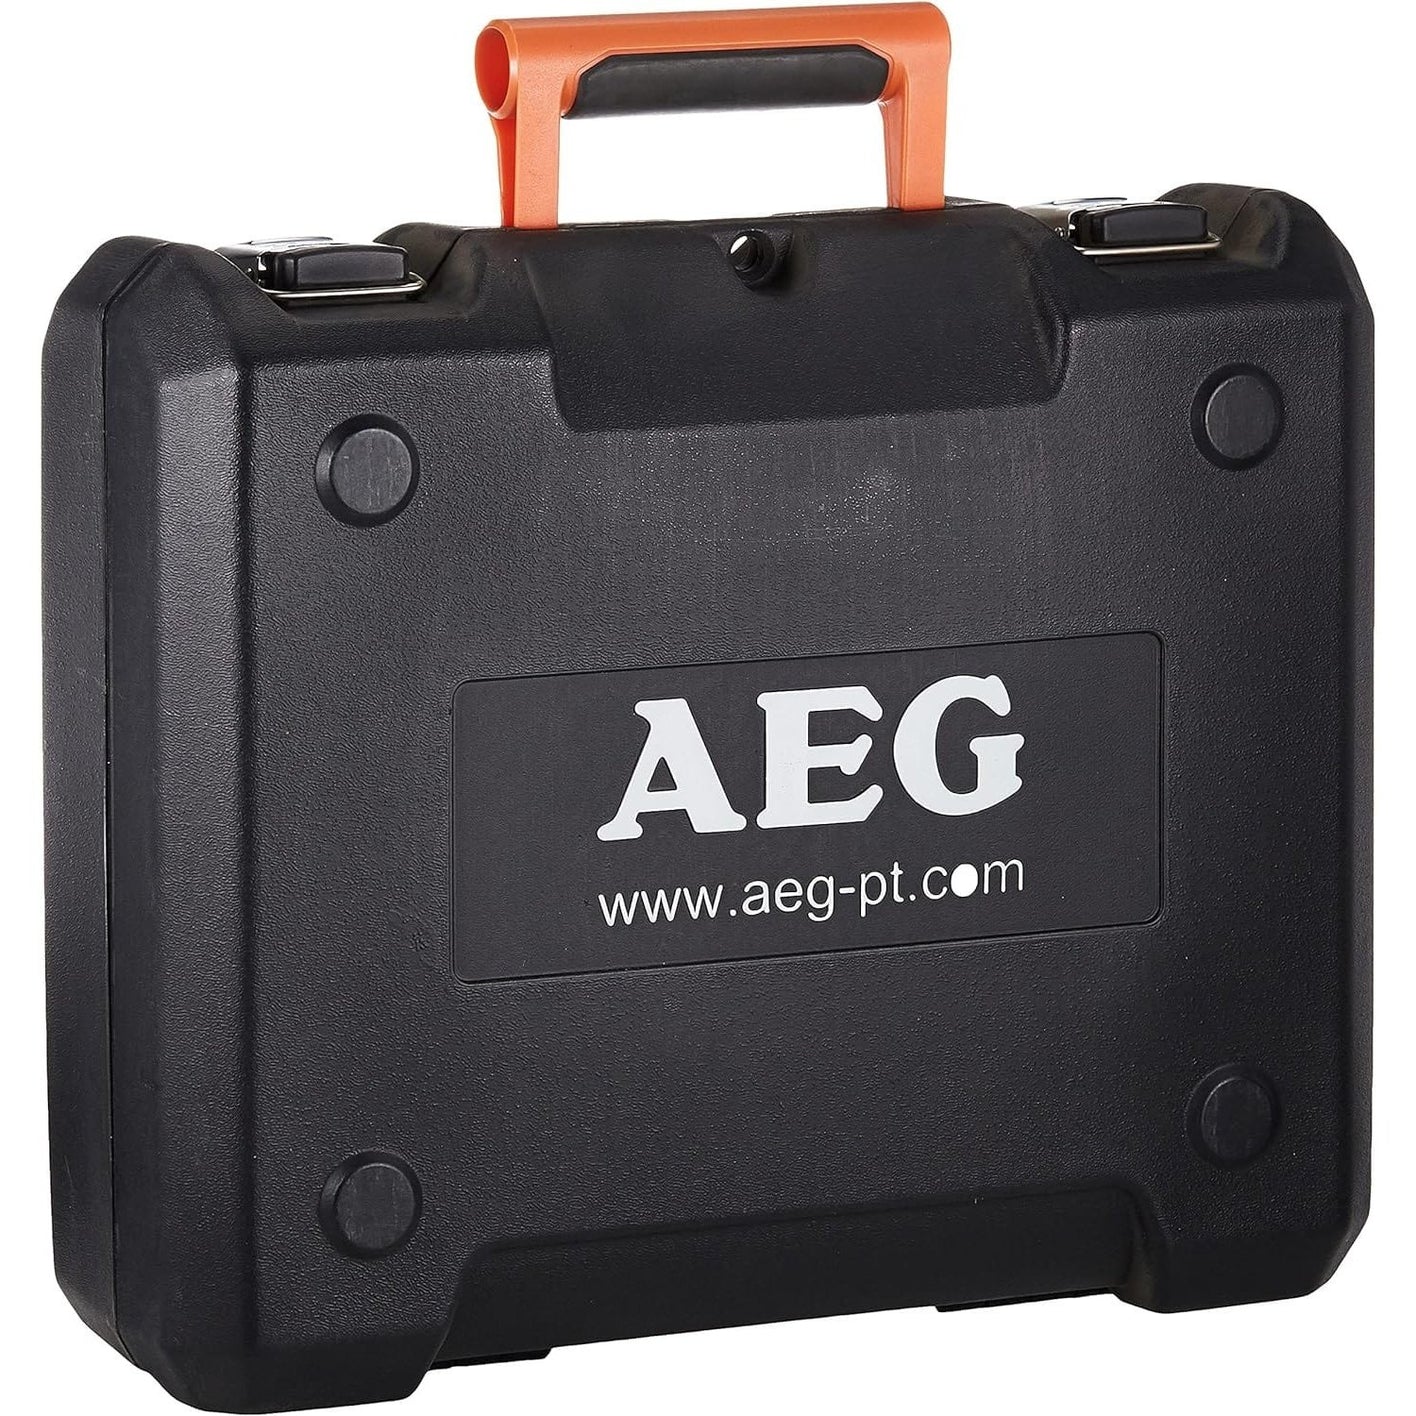 AEG Percussion Drill 13mm 1010W - SB22-2E | Supply Master Accra, Ghana Drill Buy Tools hardware Building materials